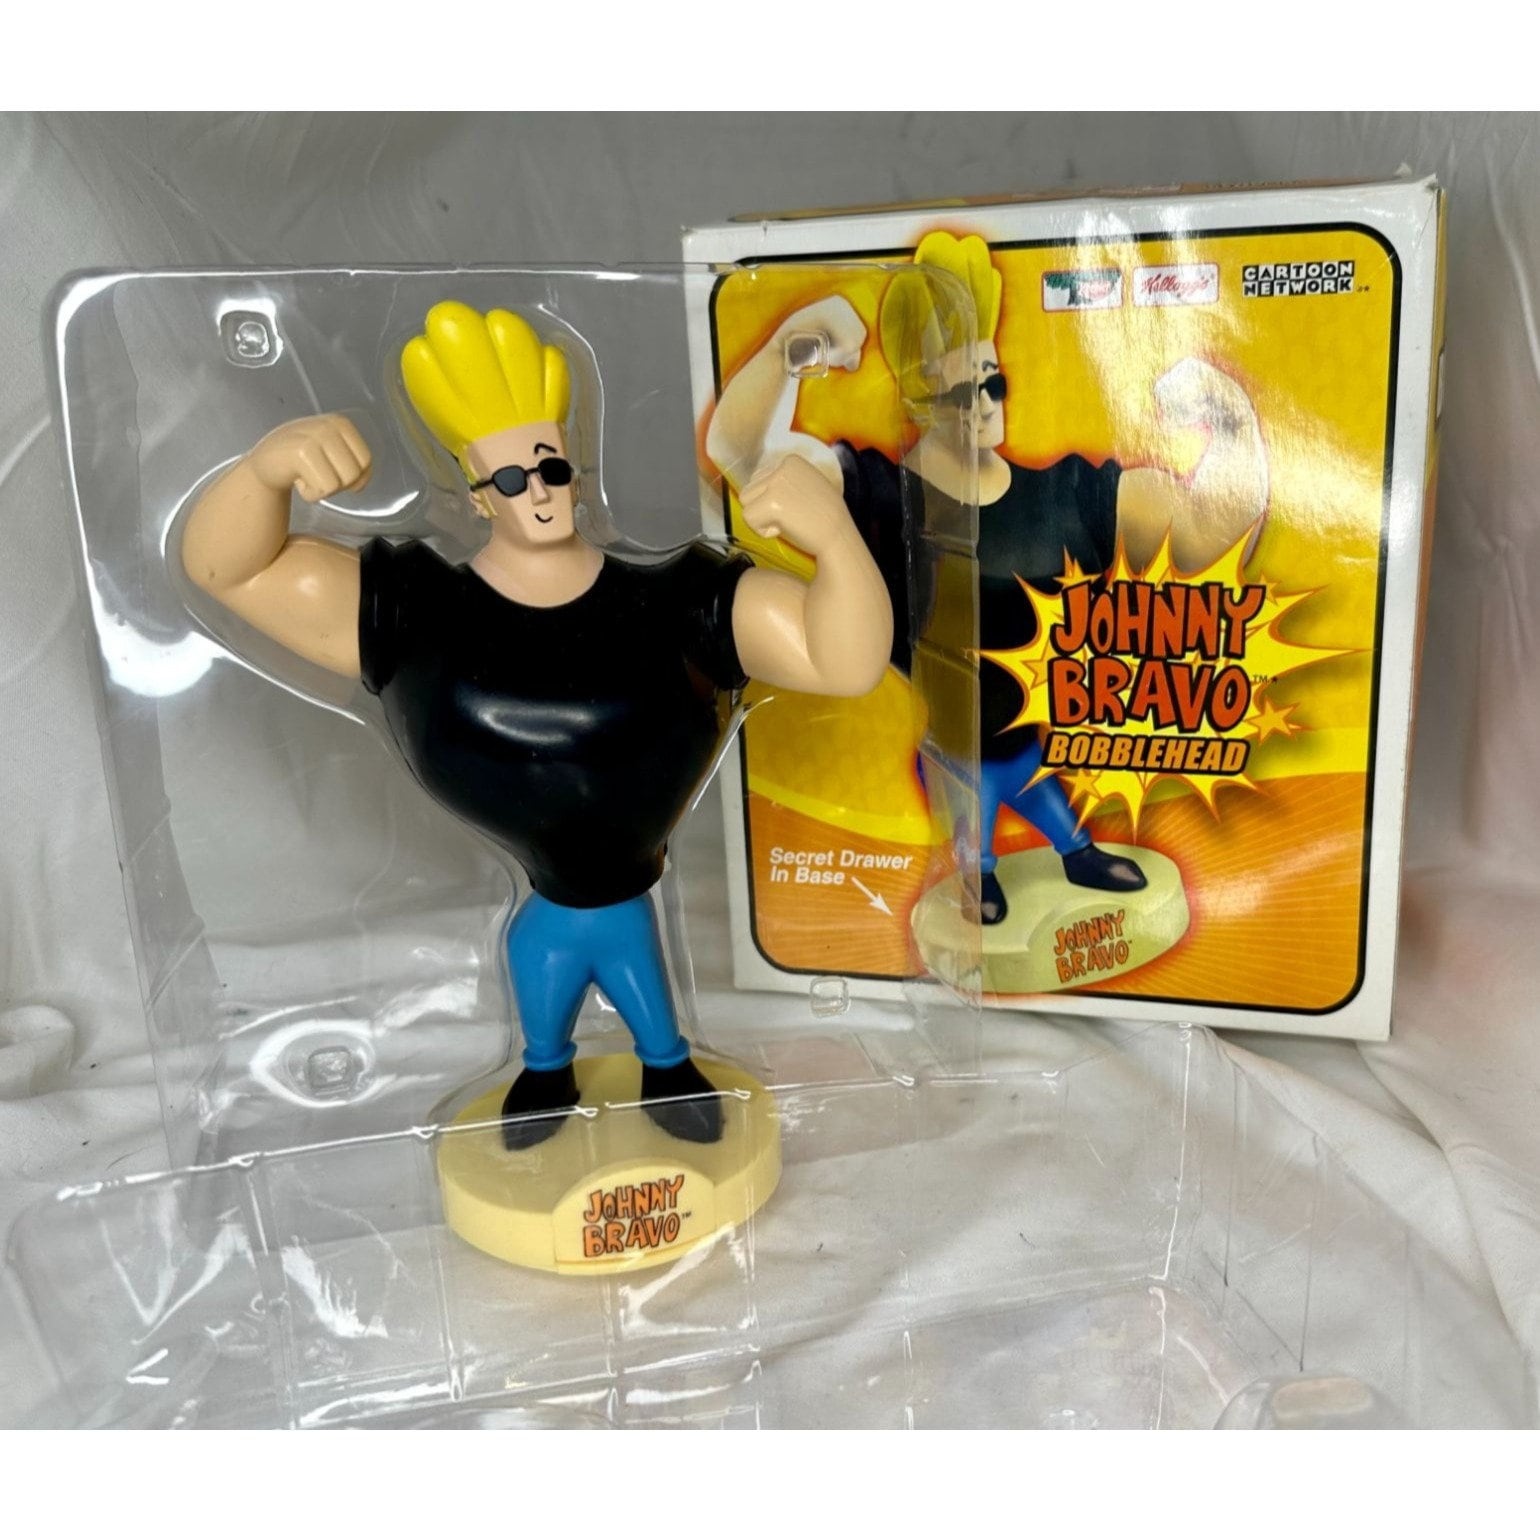 Johnny Bravo 2002 Cartoon Network Rare Bobblehead Kelloggs Keebler Used Box  